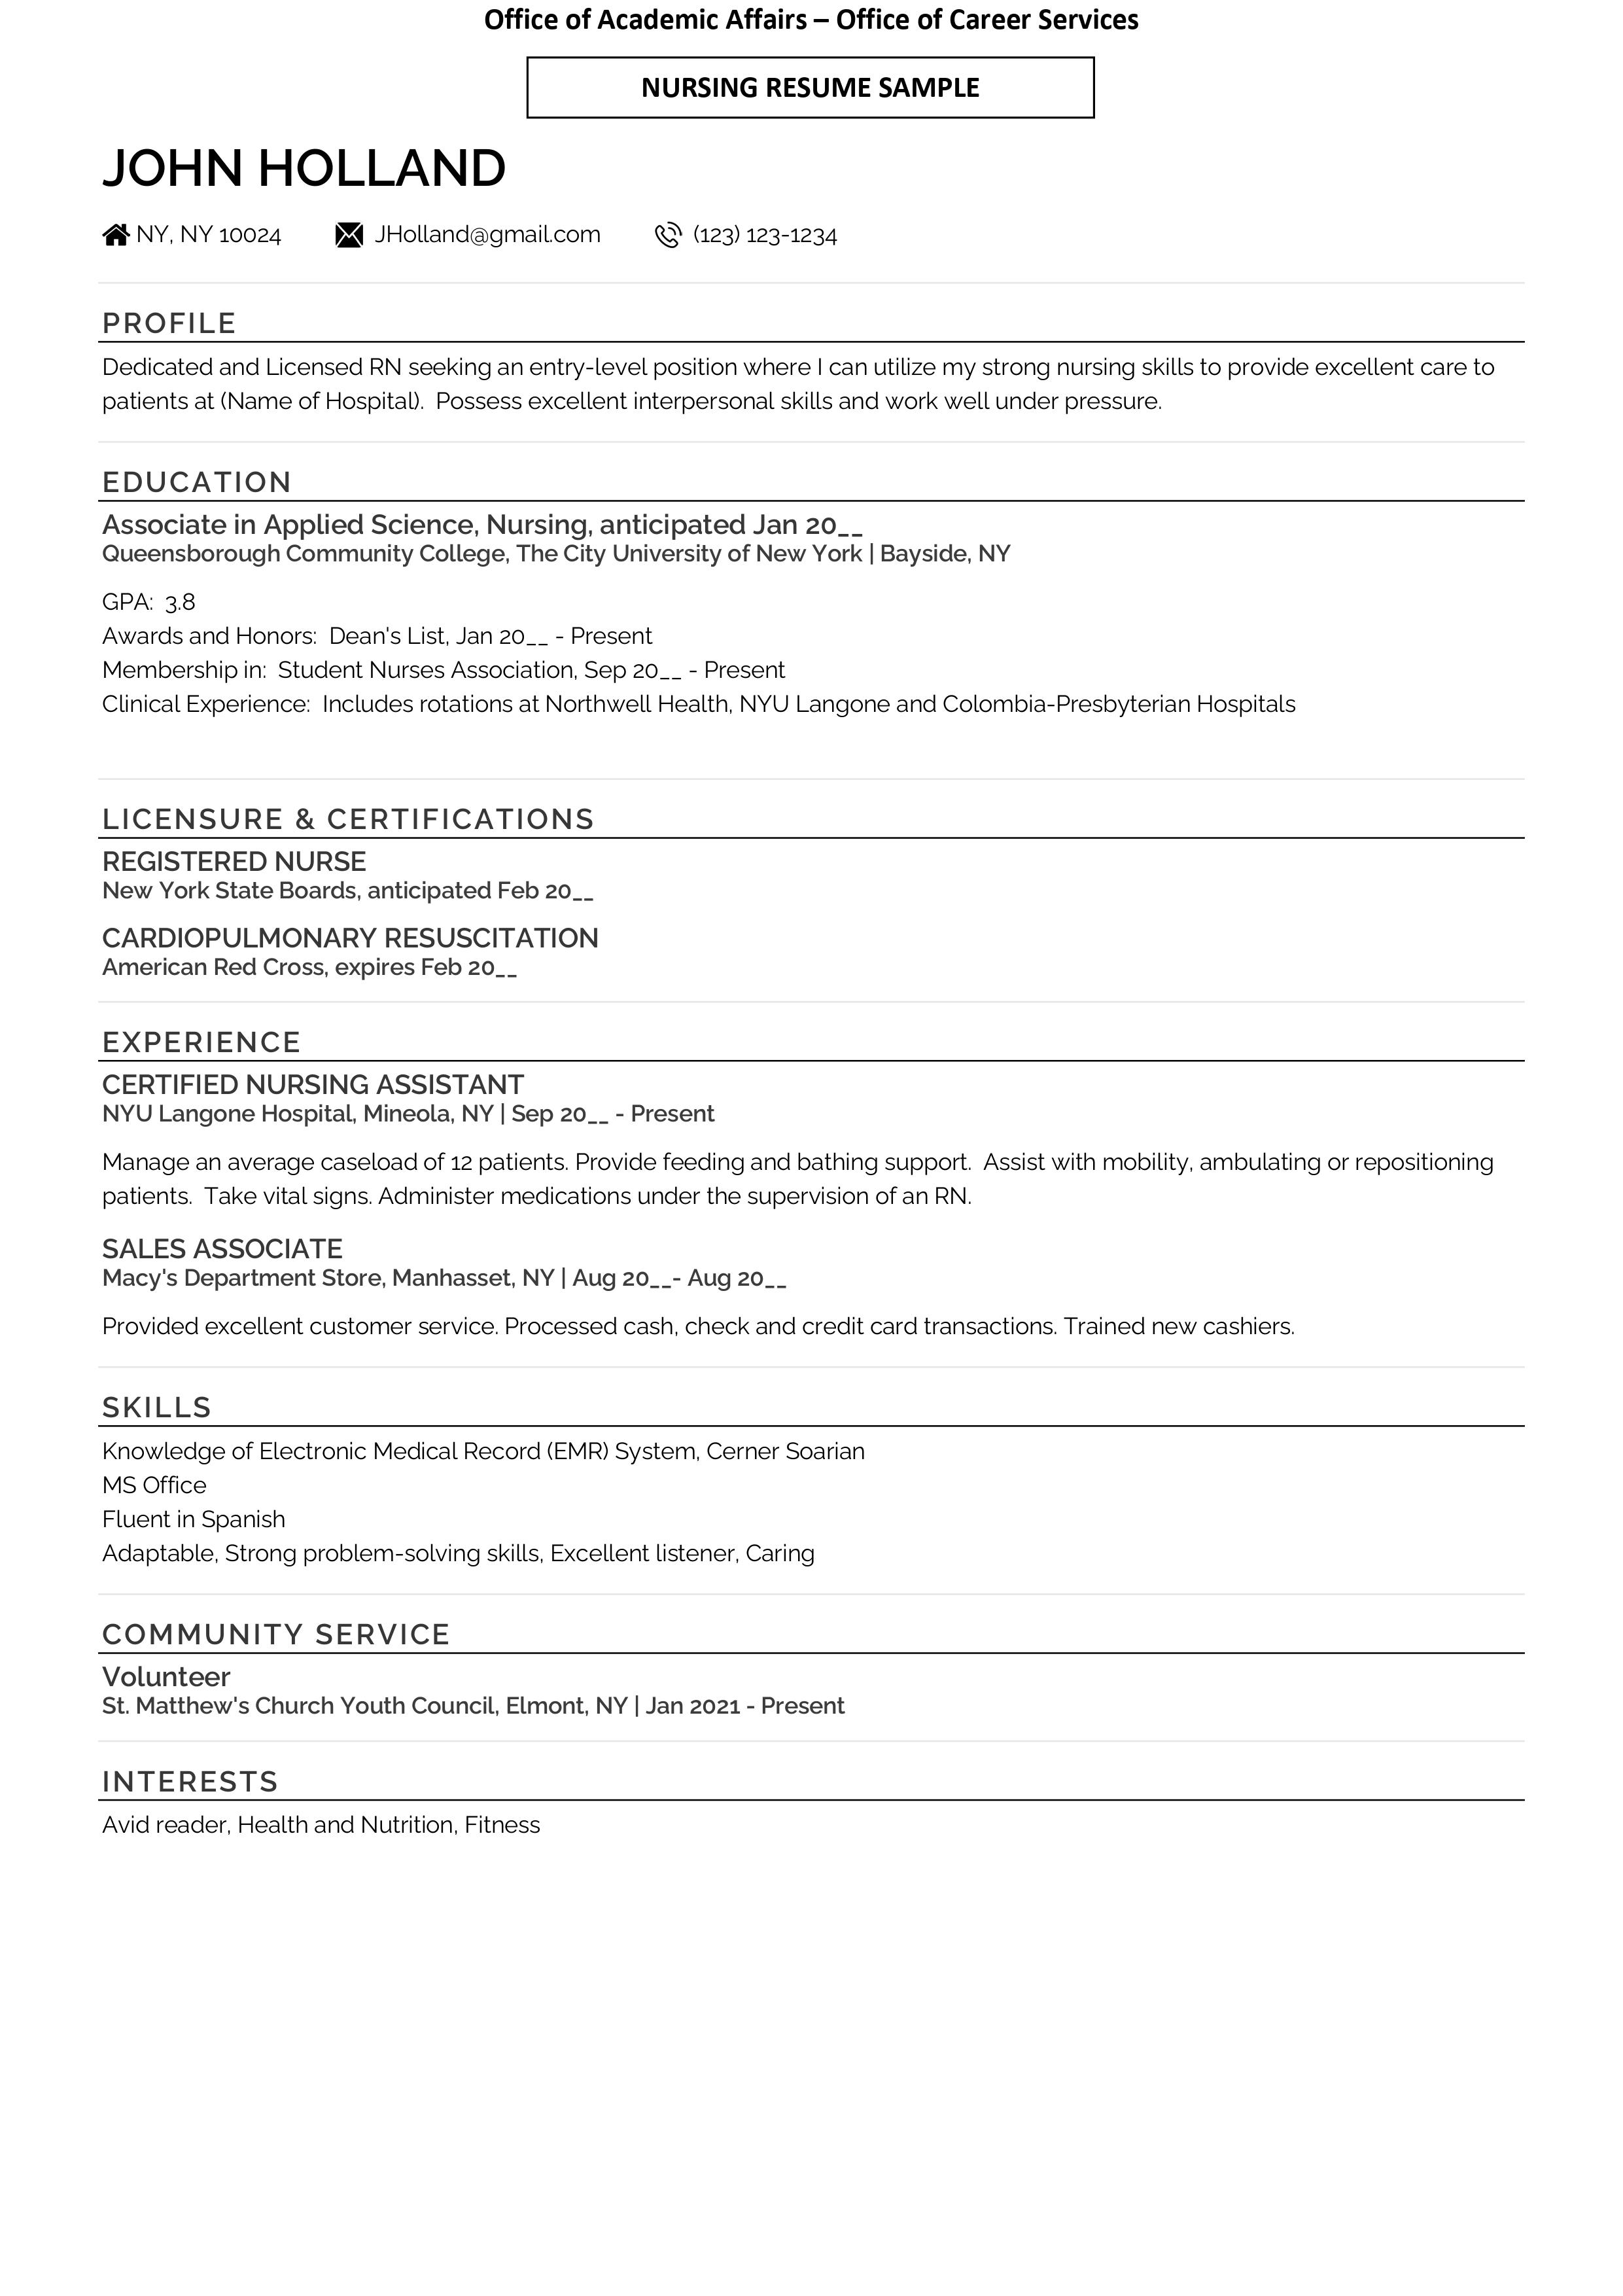 sample nursing resume with smaller font